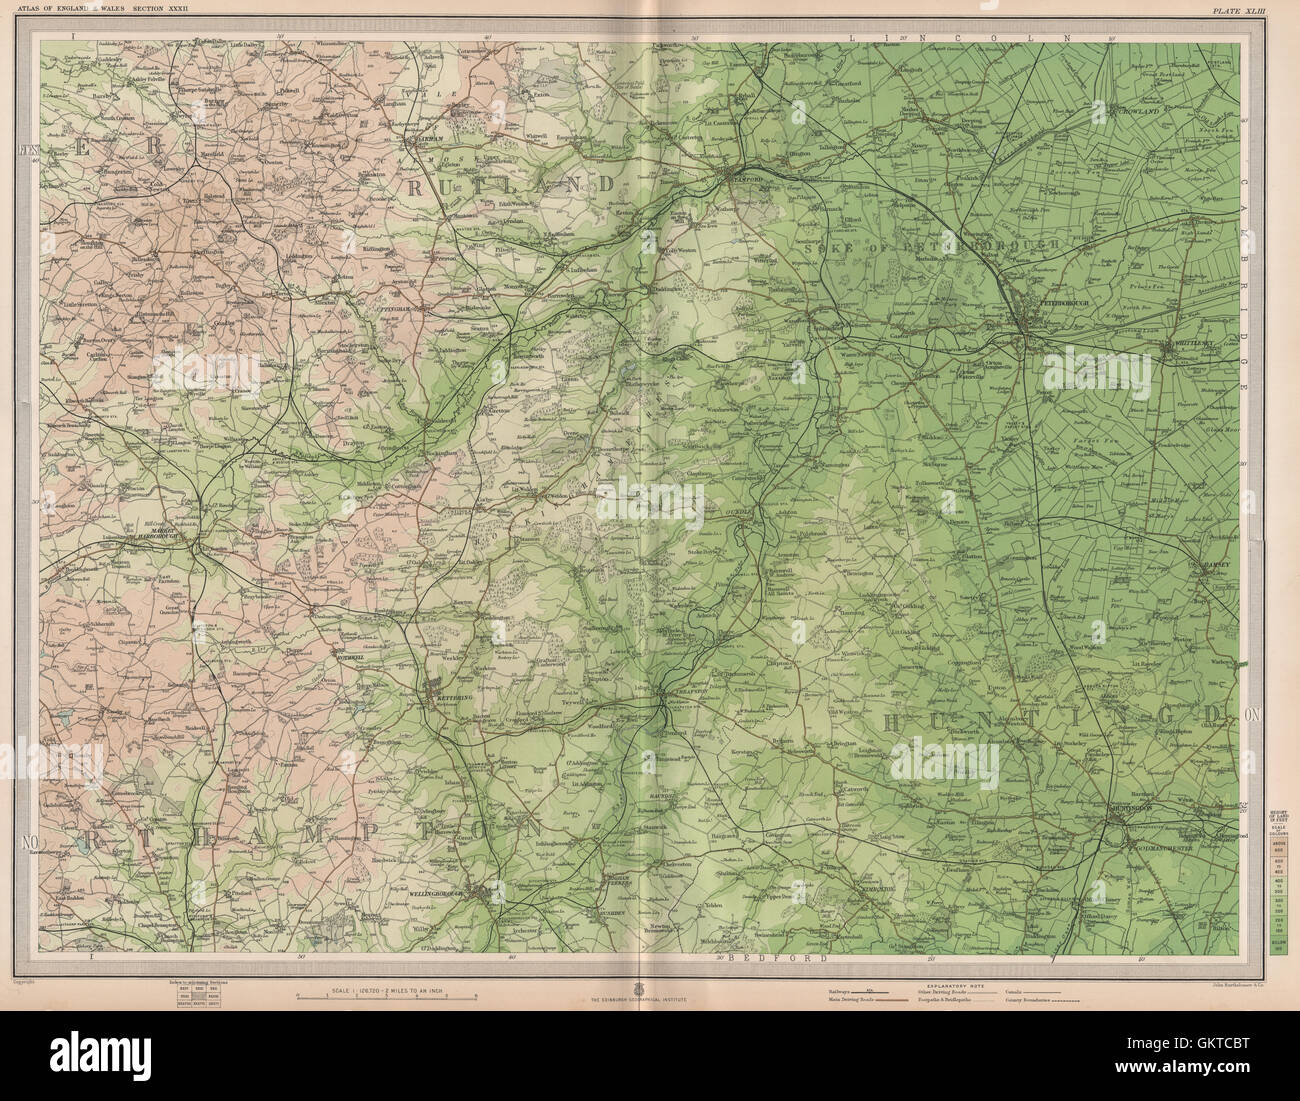 EAST MIDLANDS. Soke of Peterborough Huntingdon Kettering Rutland. LARGE 1903 map Stock Photo